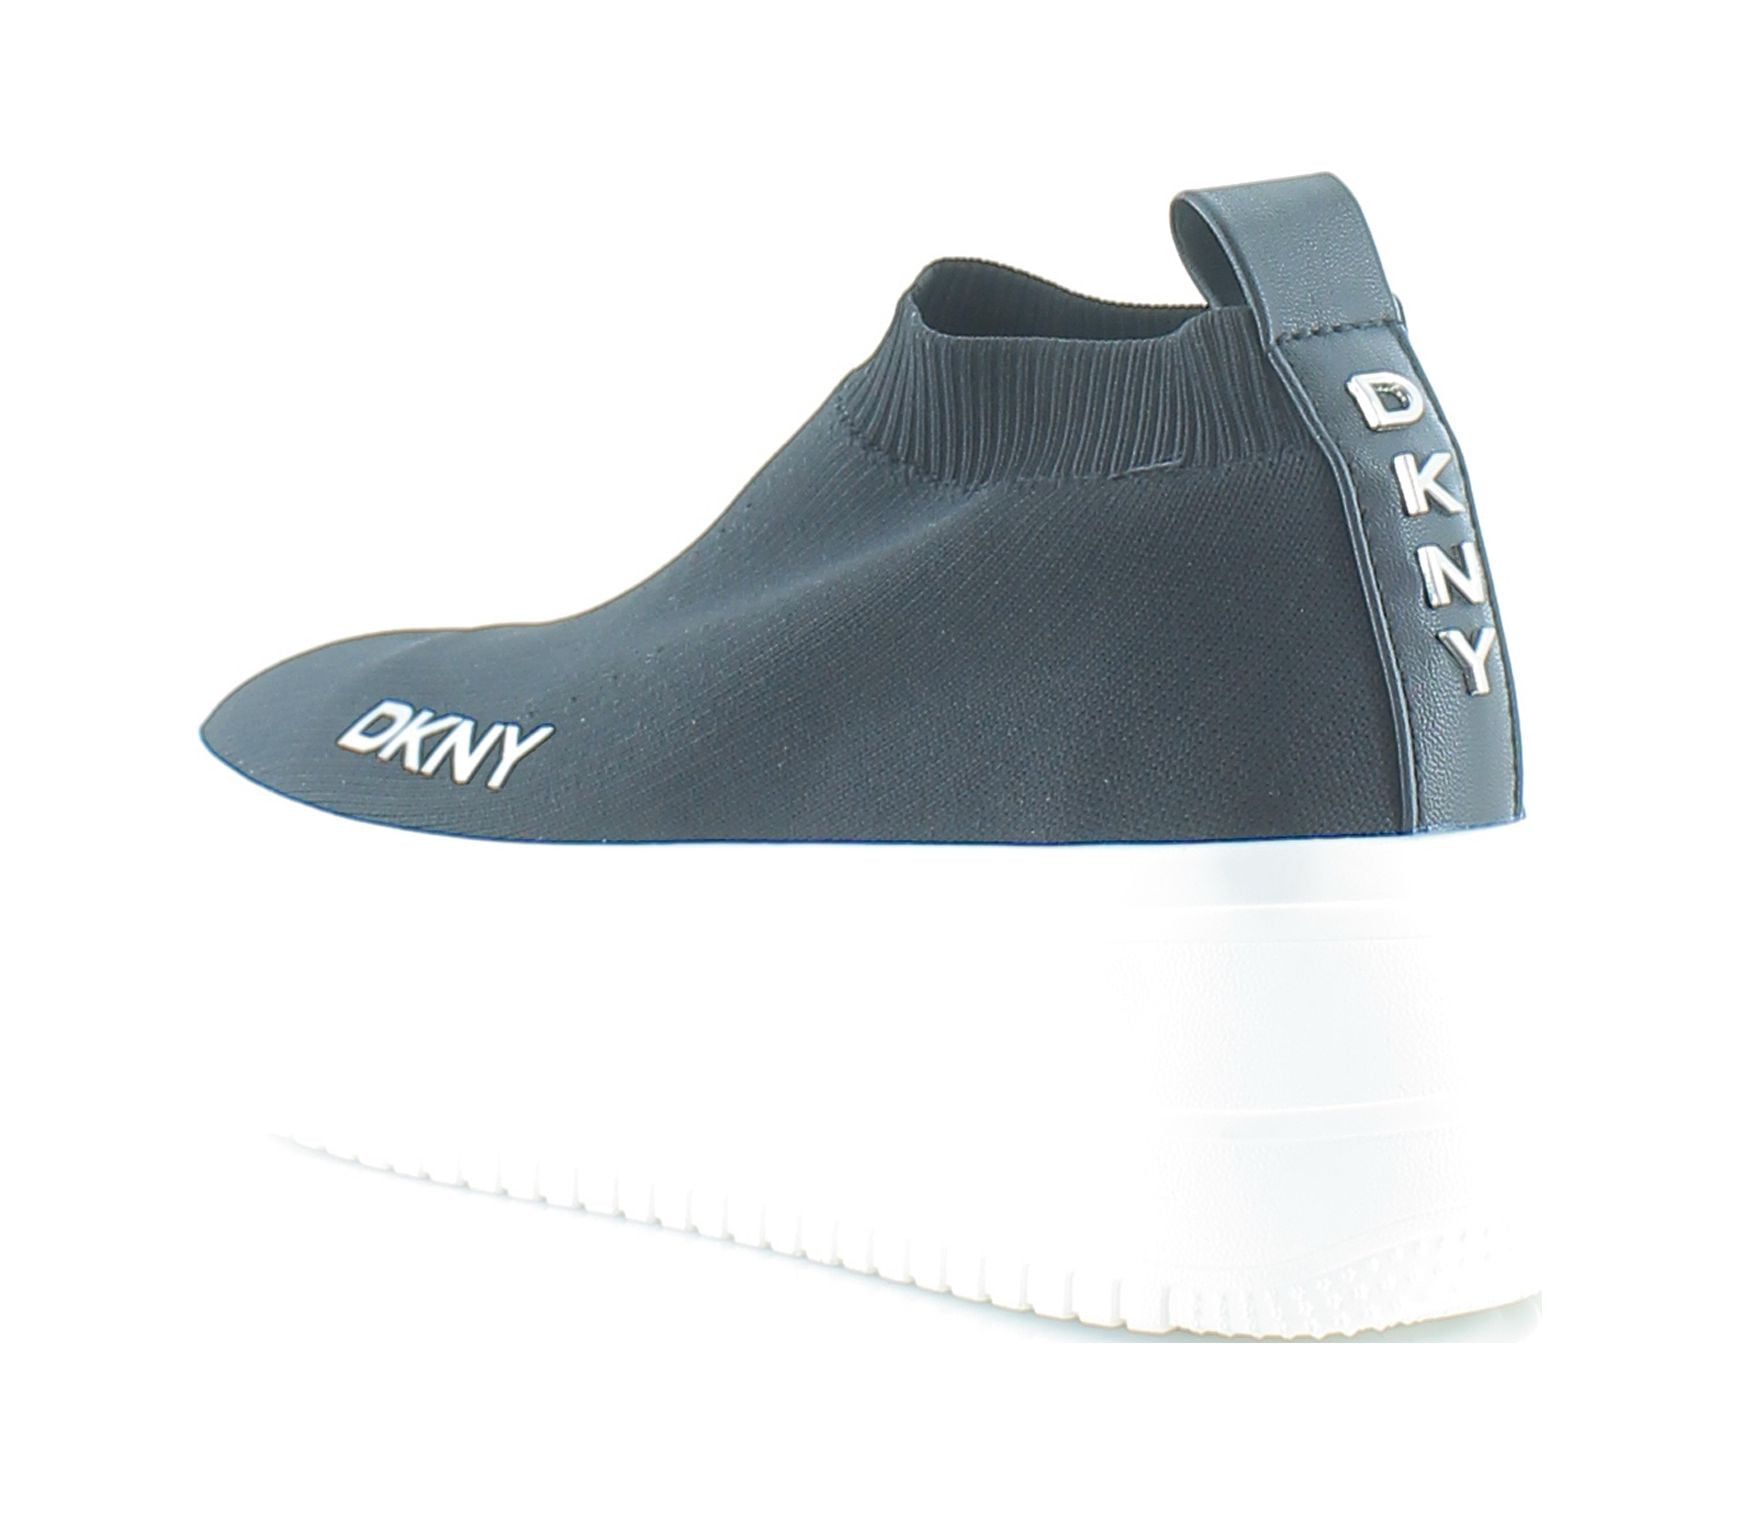 DKNY Mada Women's Fashion Sneakers Black Size 6 M